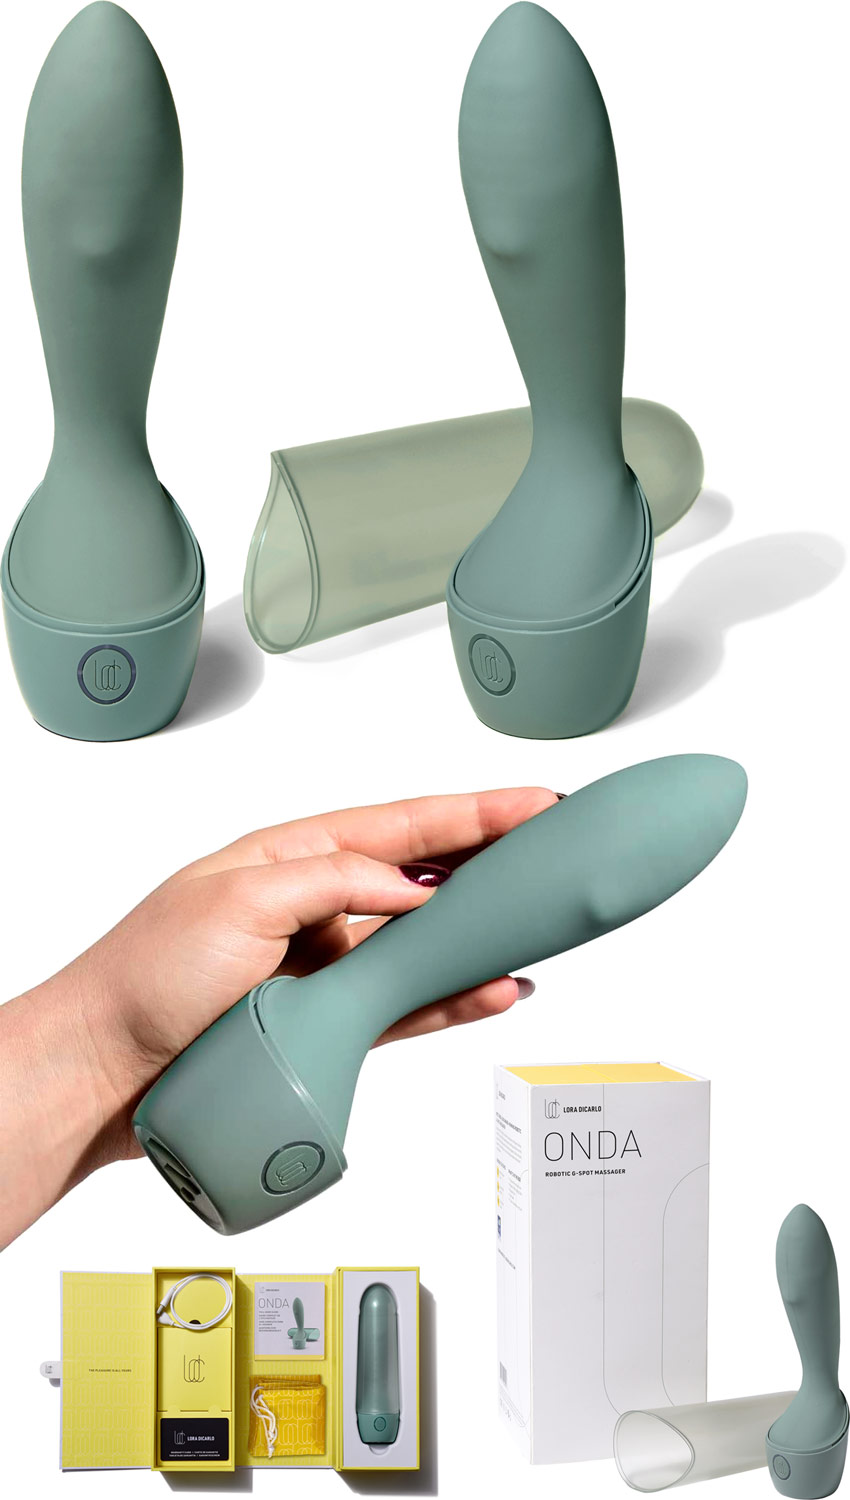 Lora DiCarlo Onda - Robotic G-spot massager